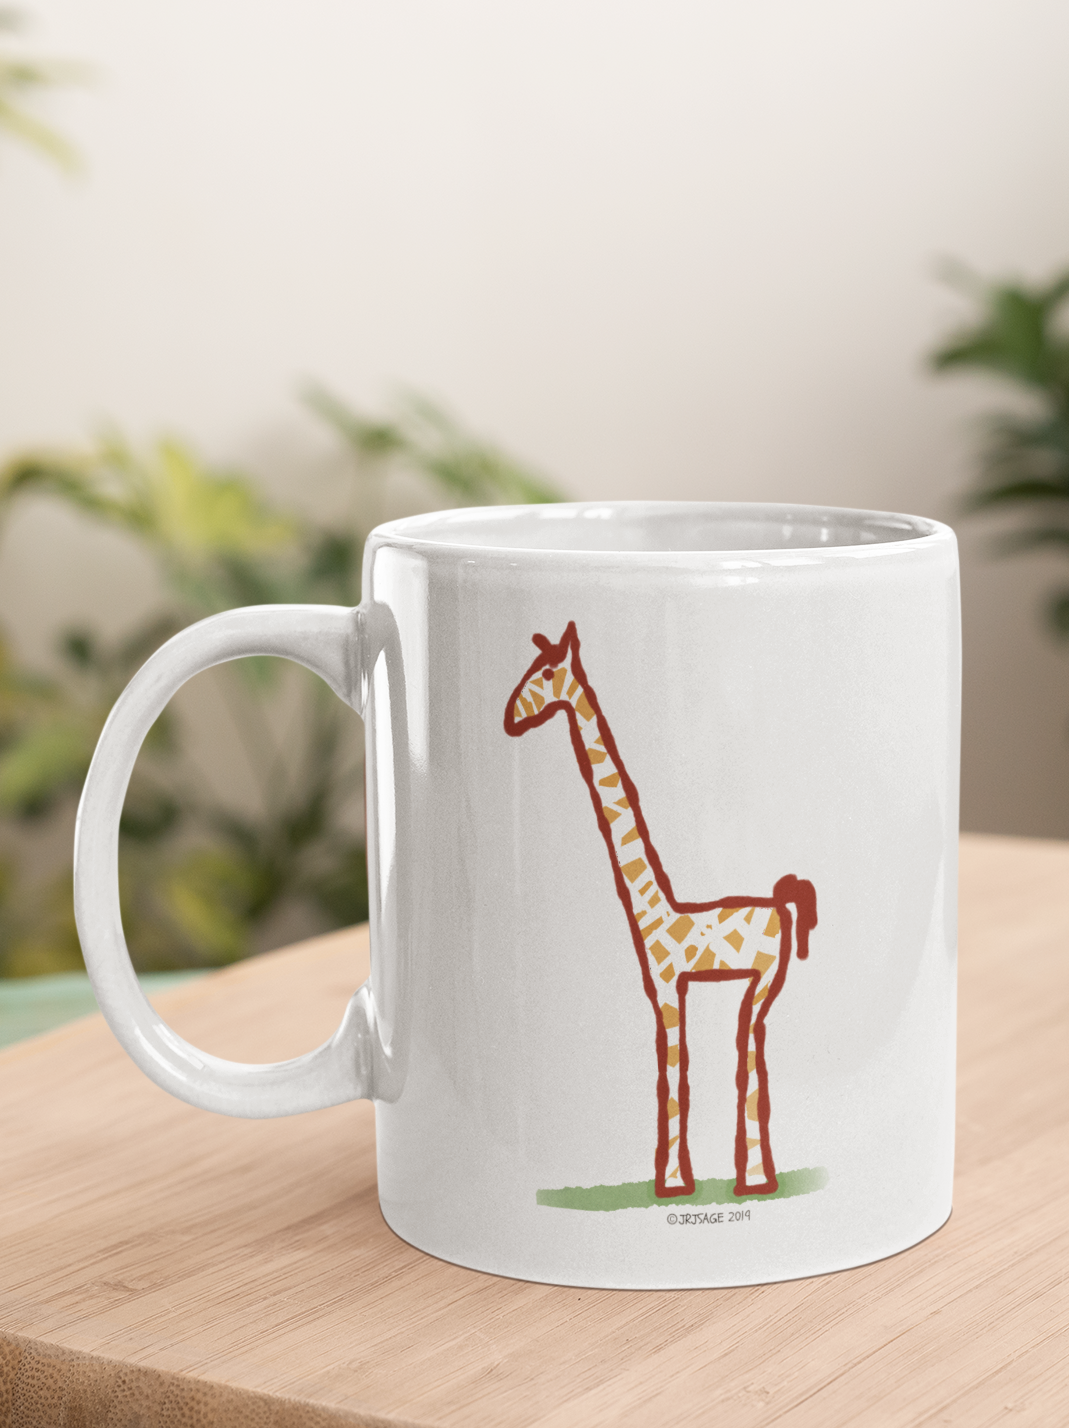 Giraffe mug - Illustrated cute animal - Jeffrey Giraffe coffee mugs by Hector and bone